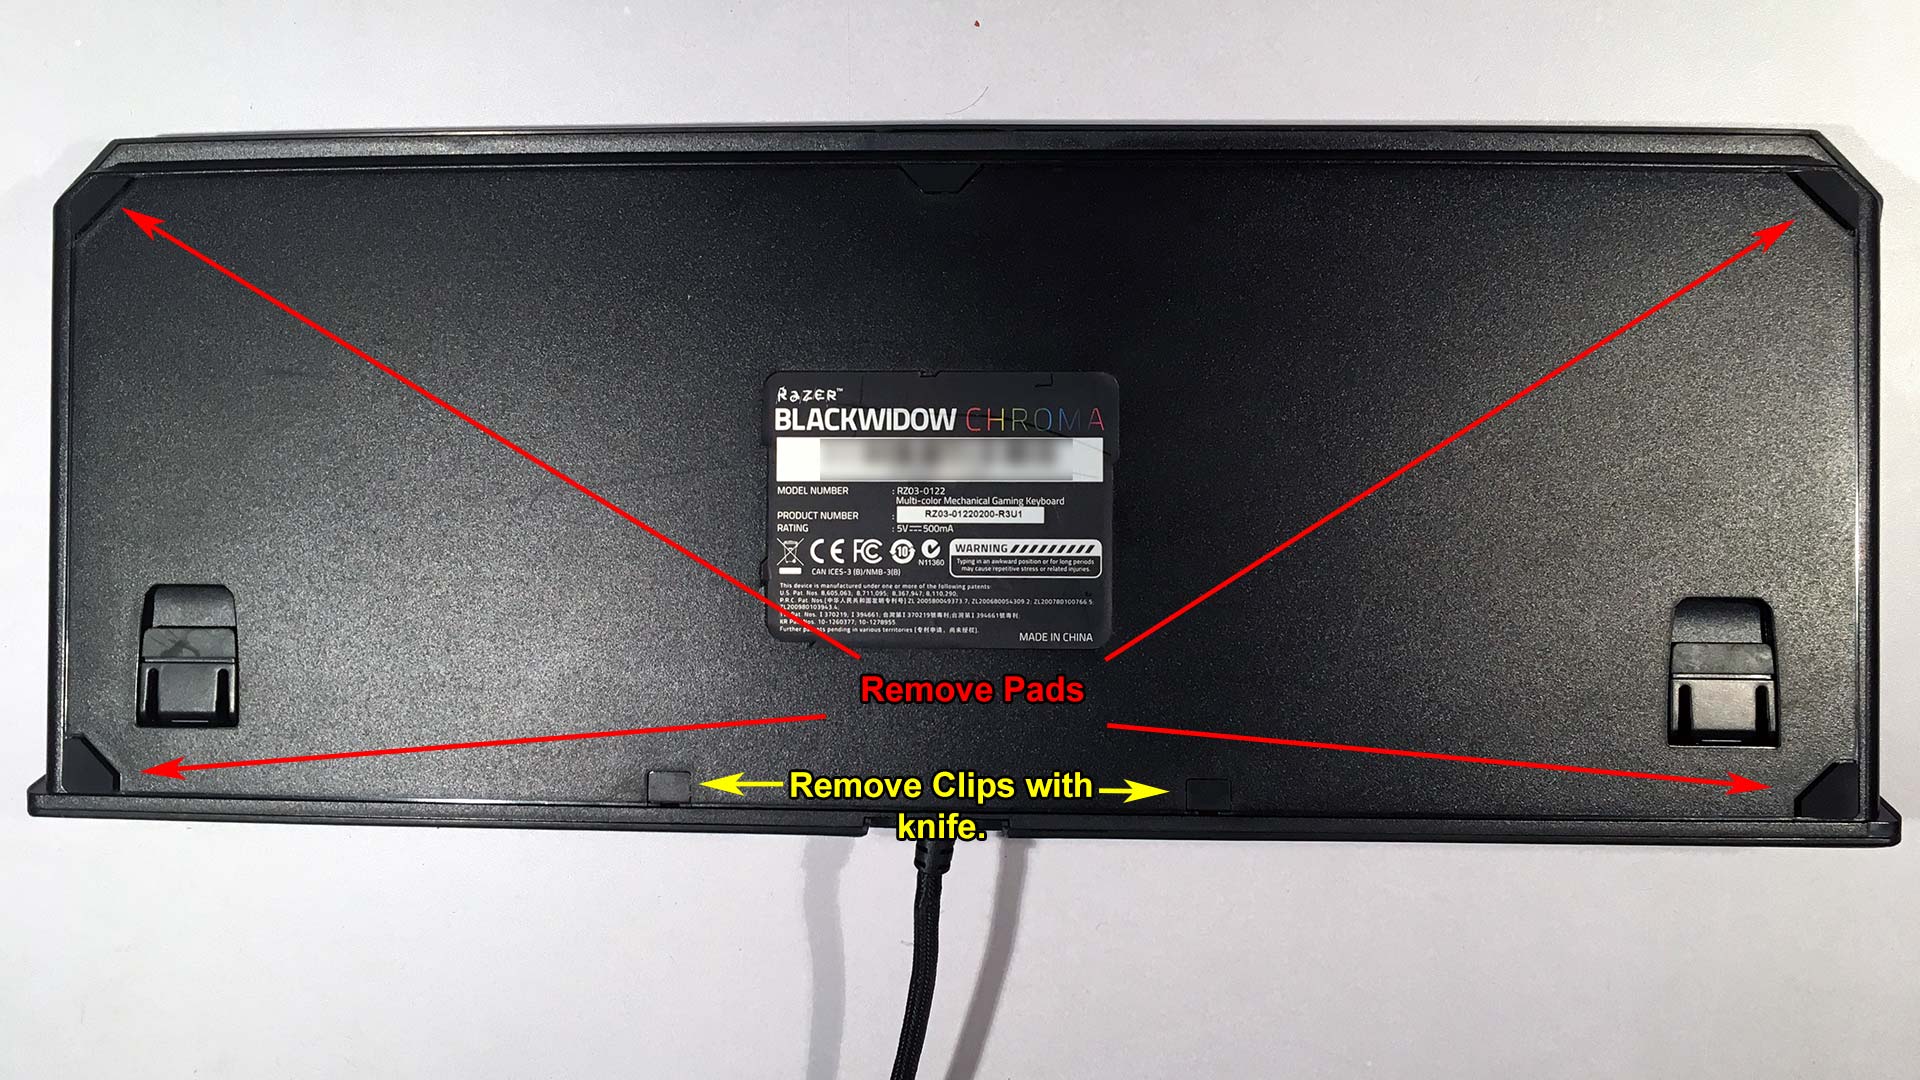 Razer Blackwidow 2014 Keyboard - Removing the rubber pads